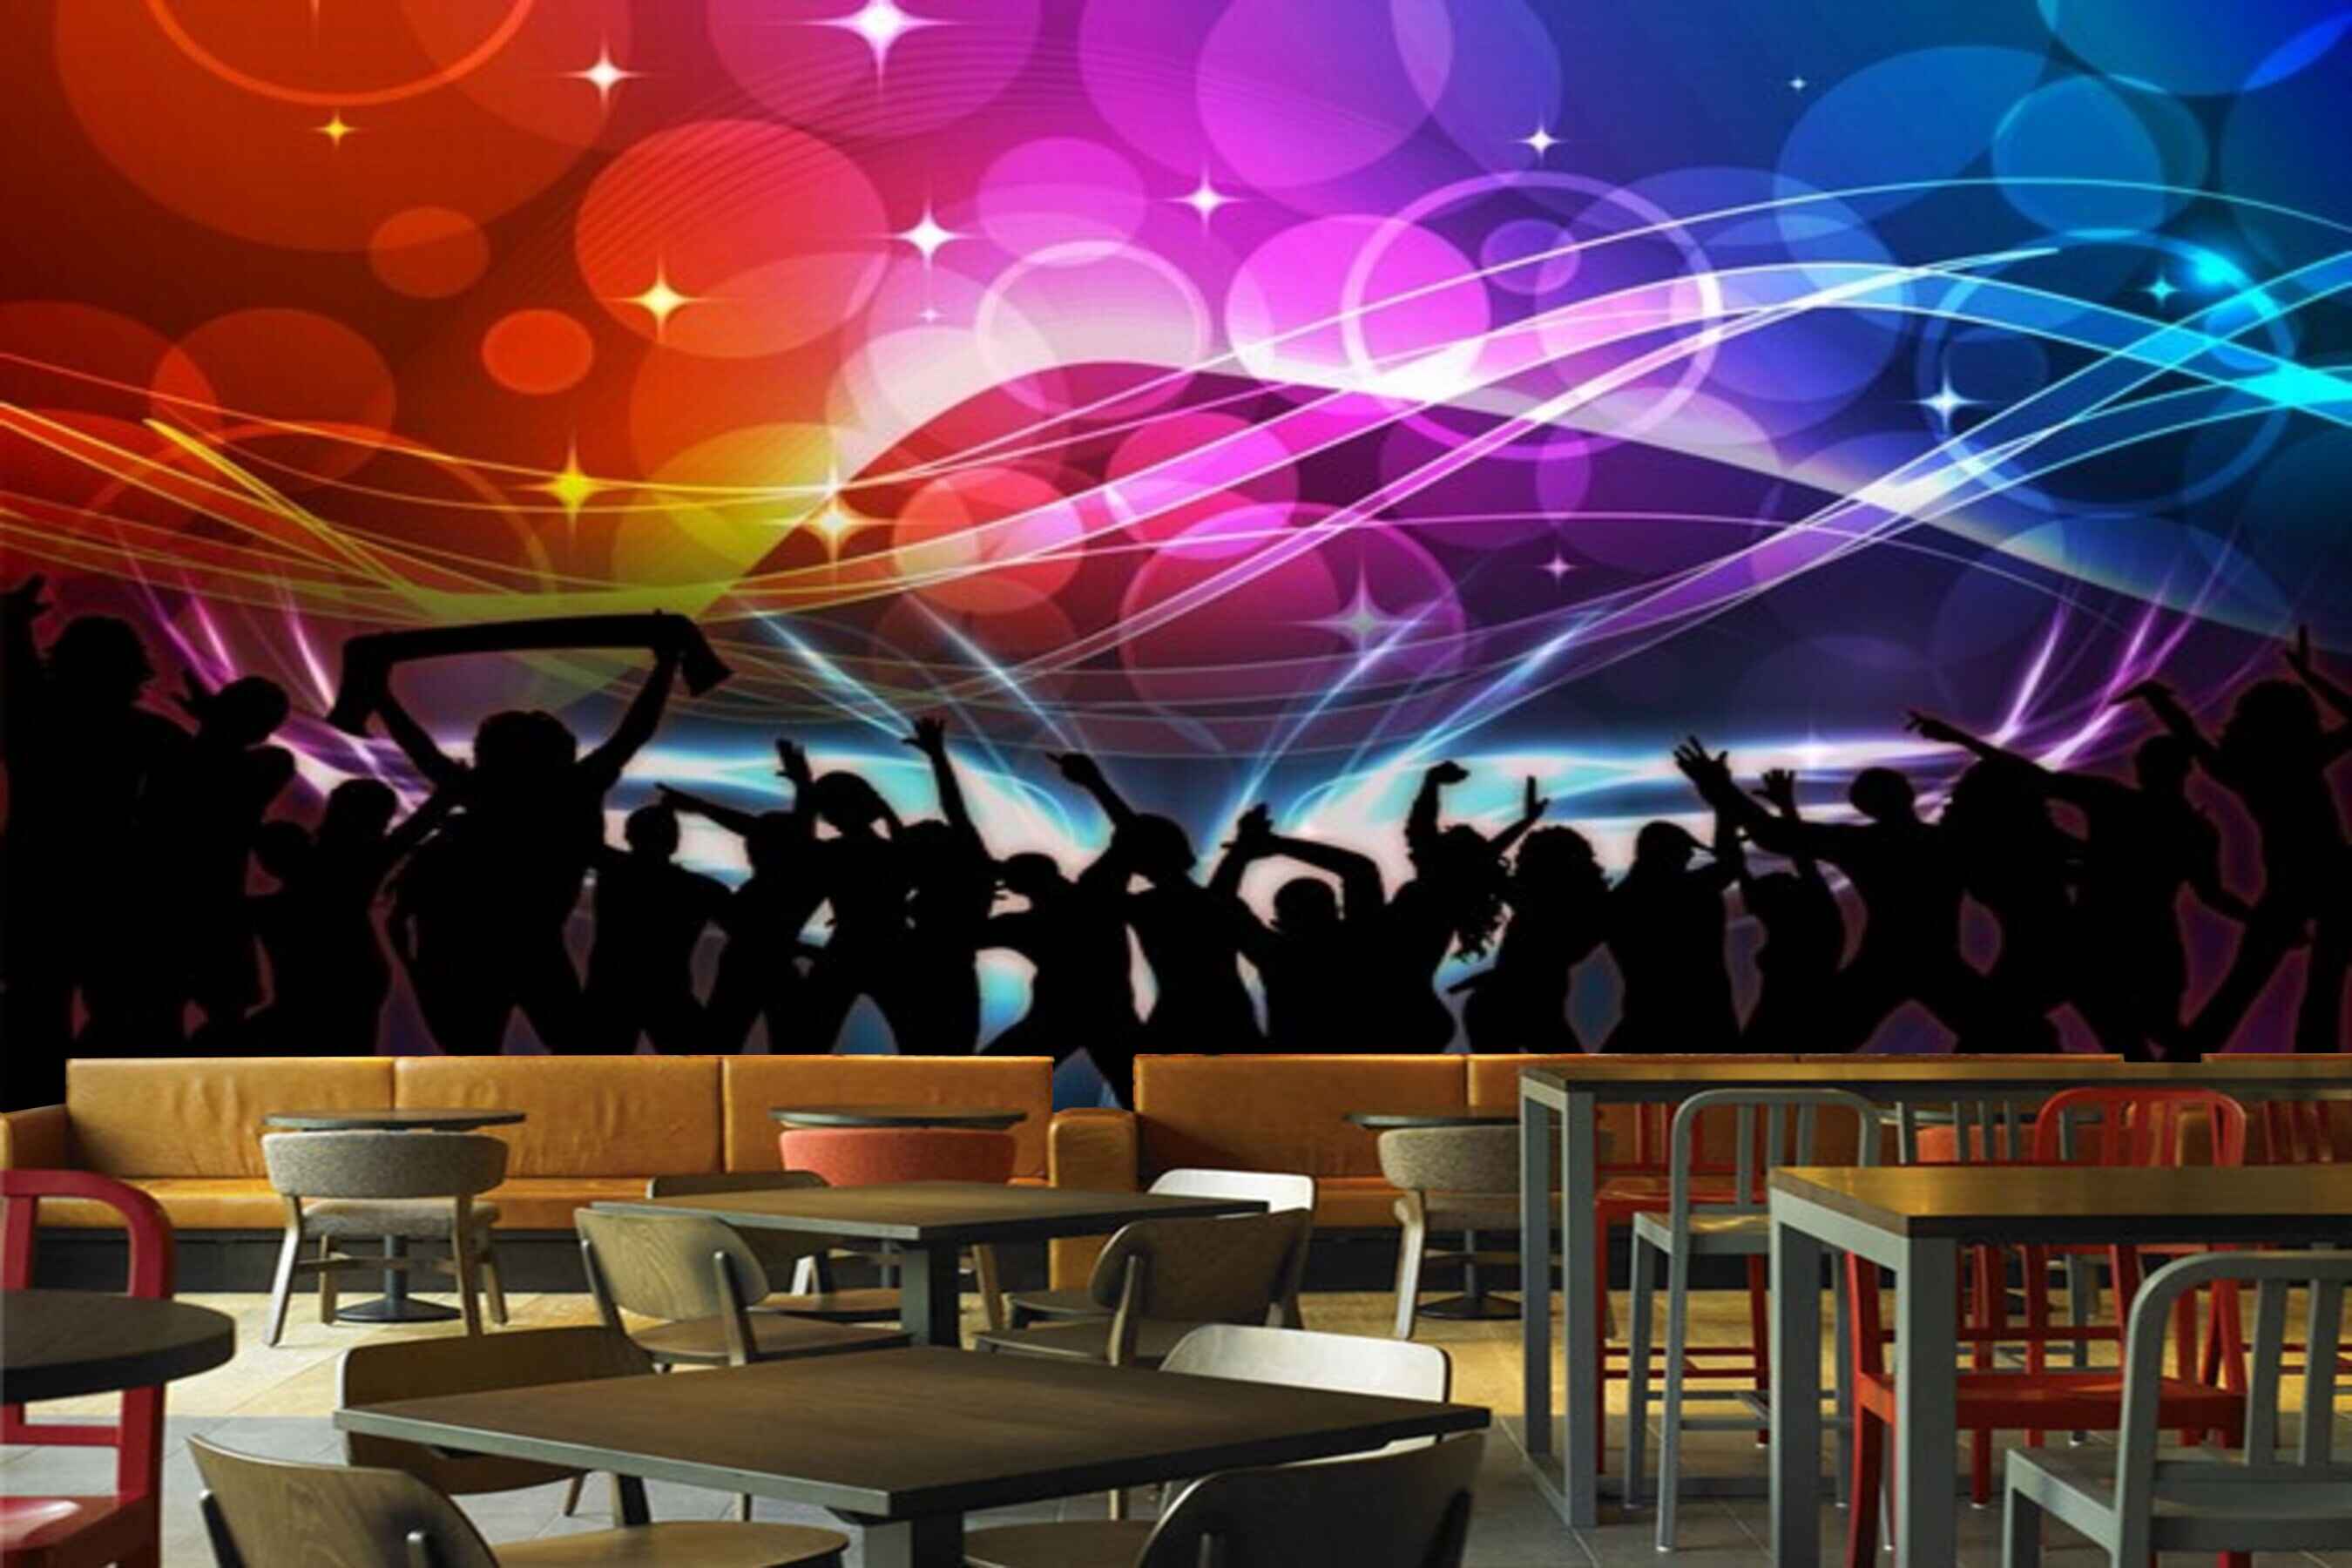 Avikalp MWZ3481 Music Dancing Rainbow Waves HD Wallpaper for Disco Club Karaoke